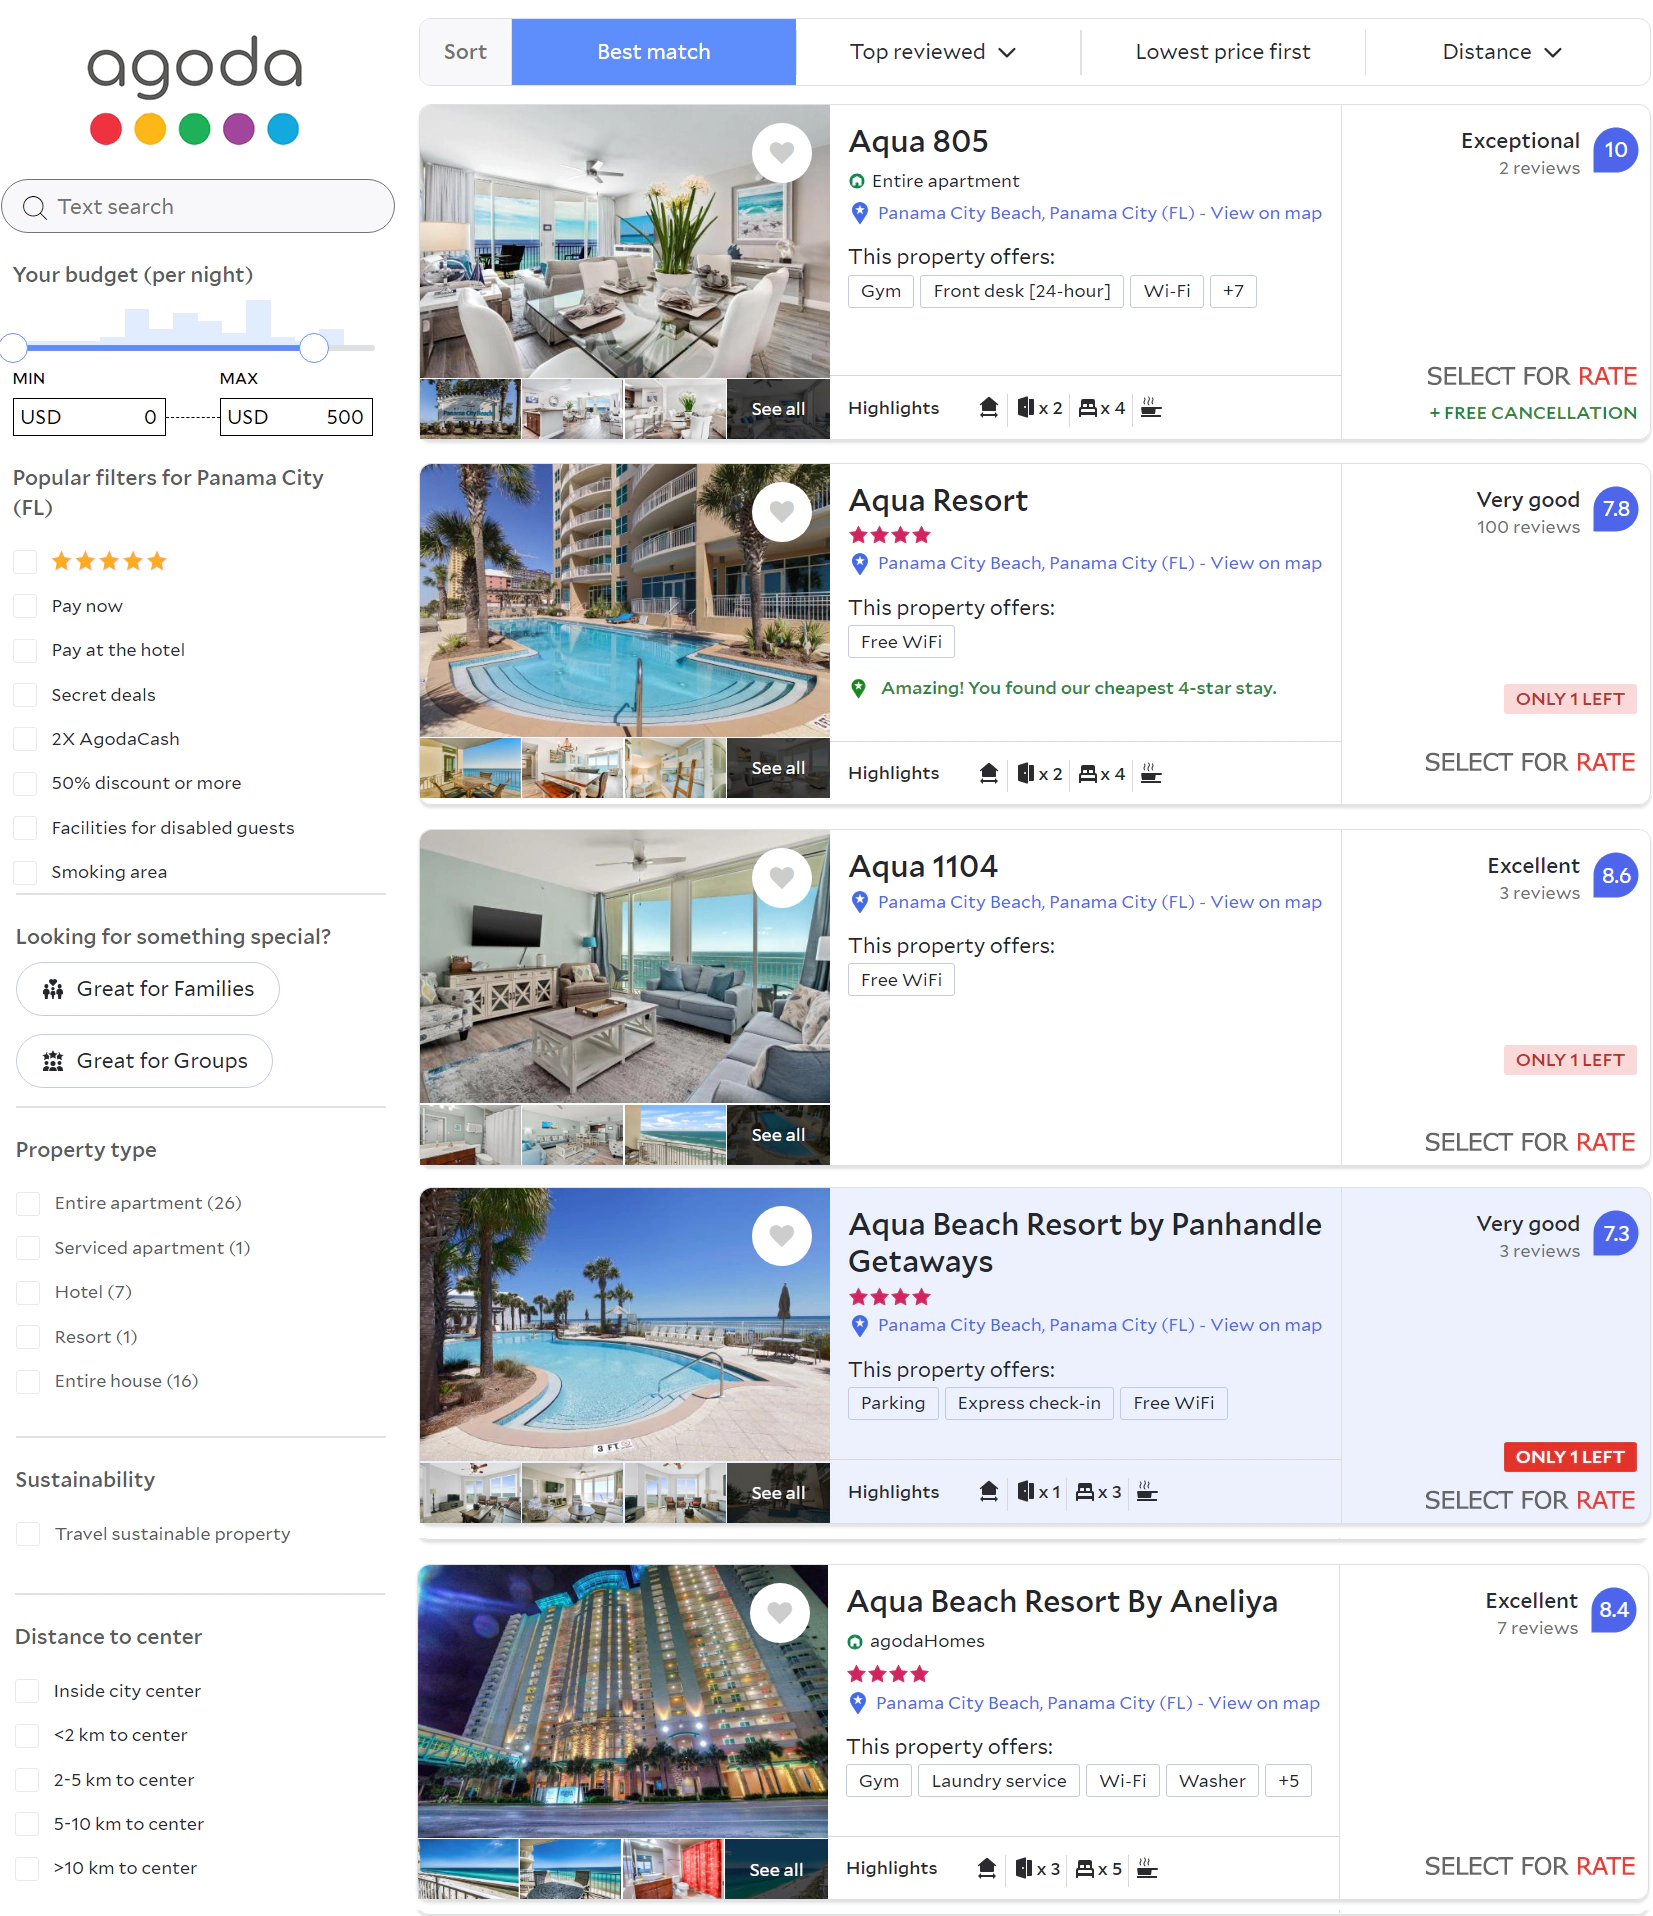 The Aqua Beach Resort Panama City Beach Florida